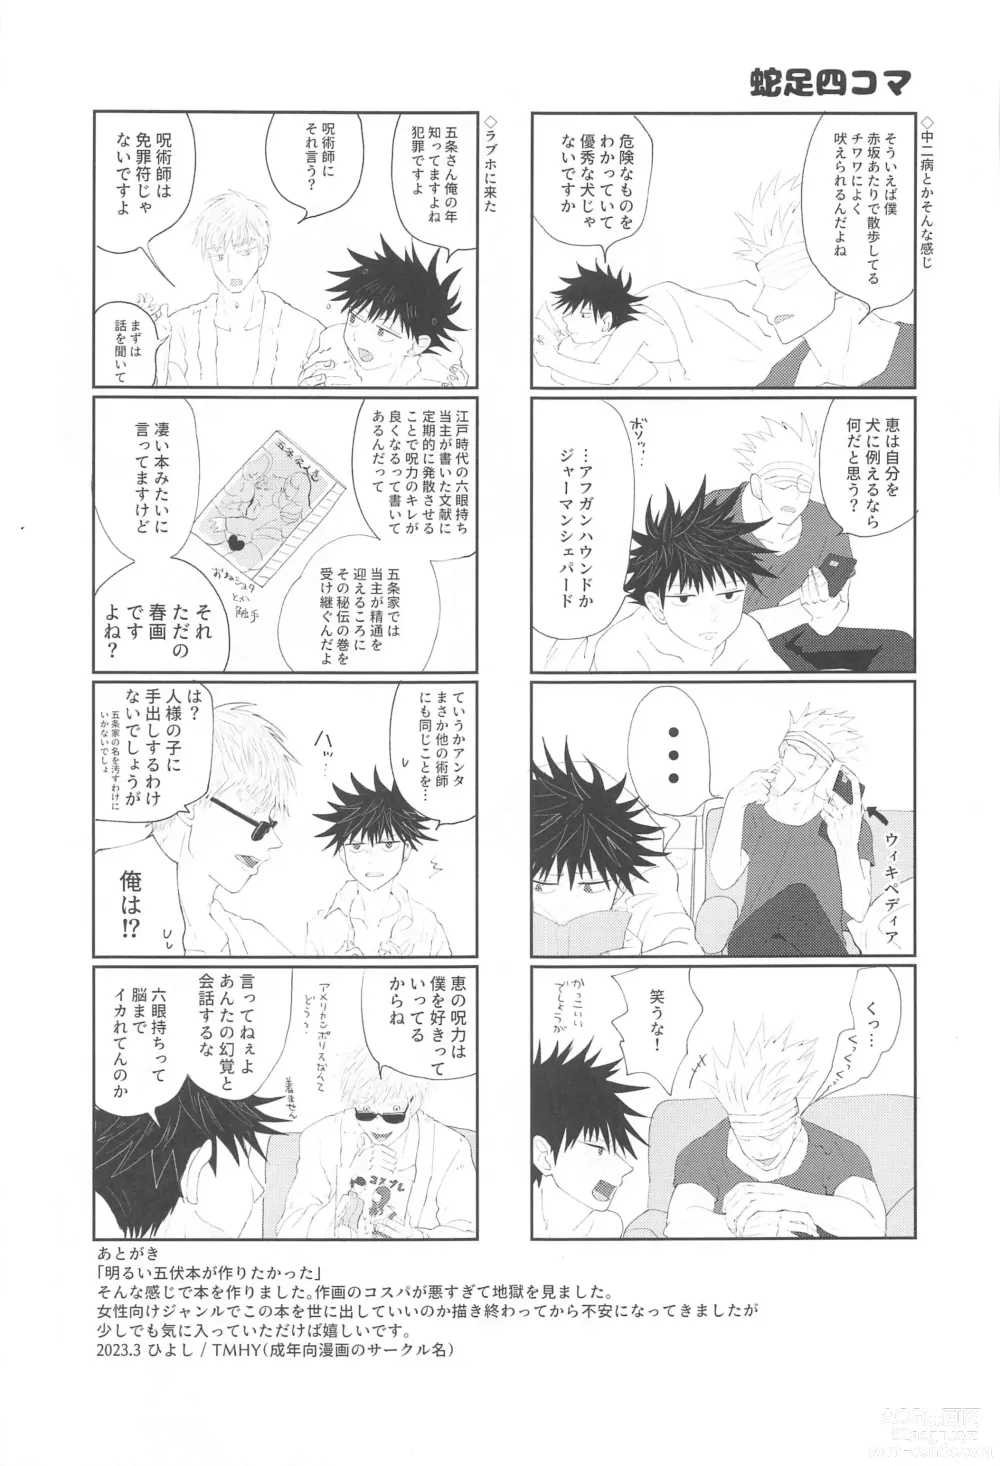 Page 20 of doujinshi Fusenai Inu